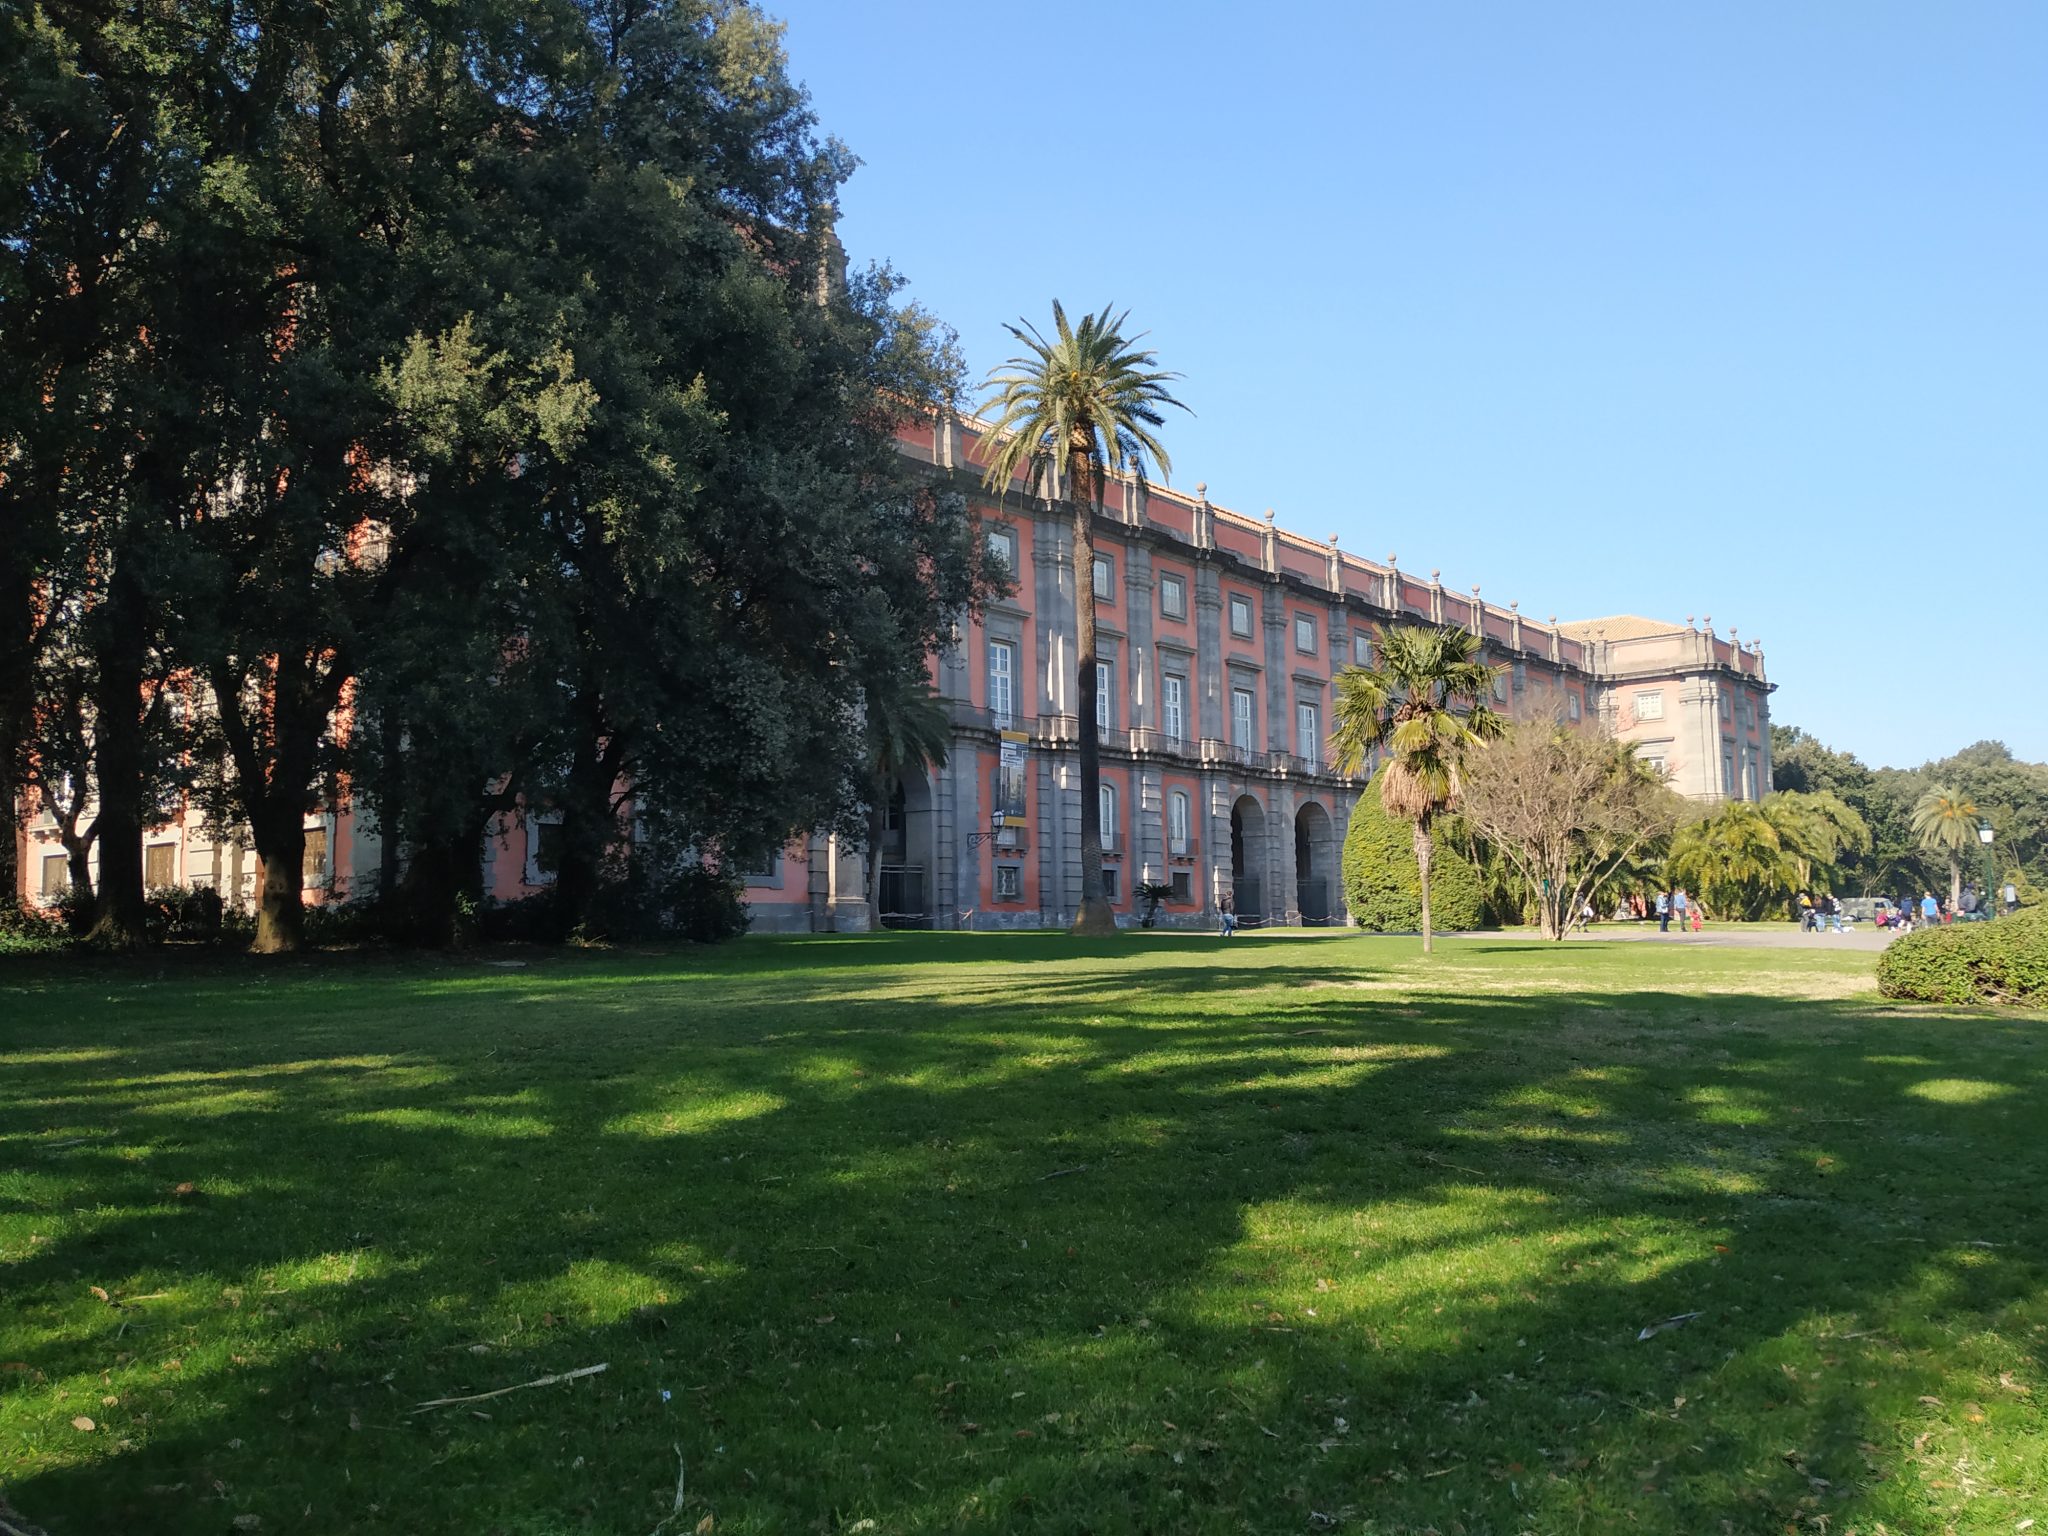 Palace of Capodimonte, Naples